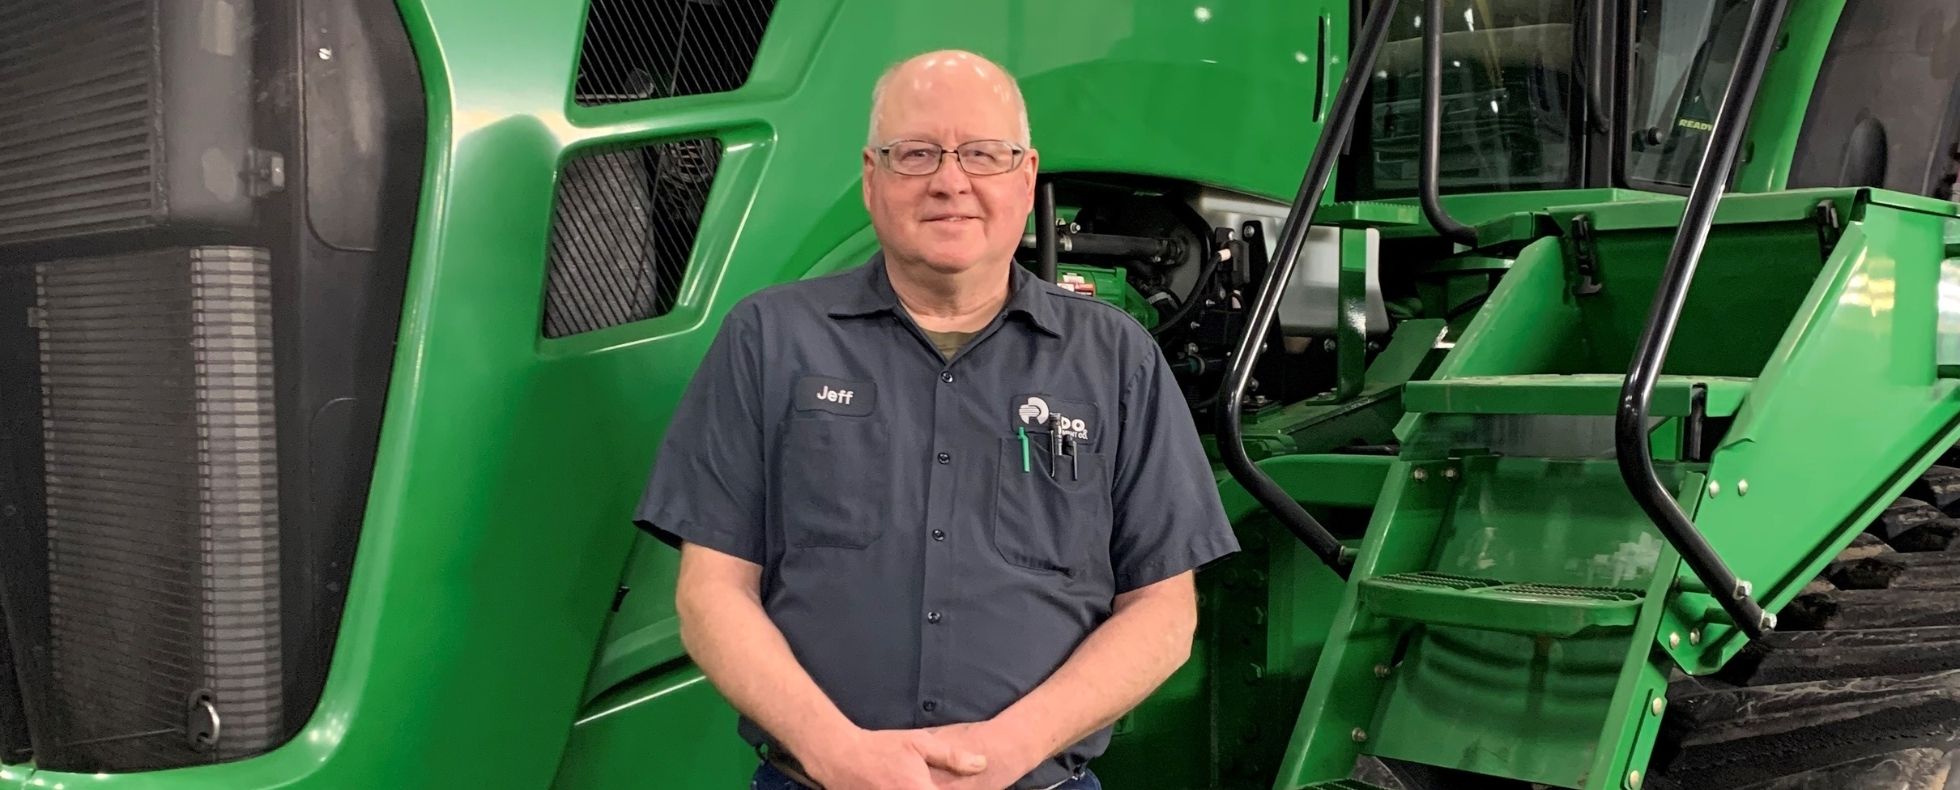 Jeff Krabbenhoft, Service Technician, Celebrates 45-year Career in a Lifetime in Agriculture